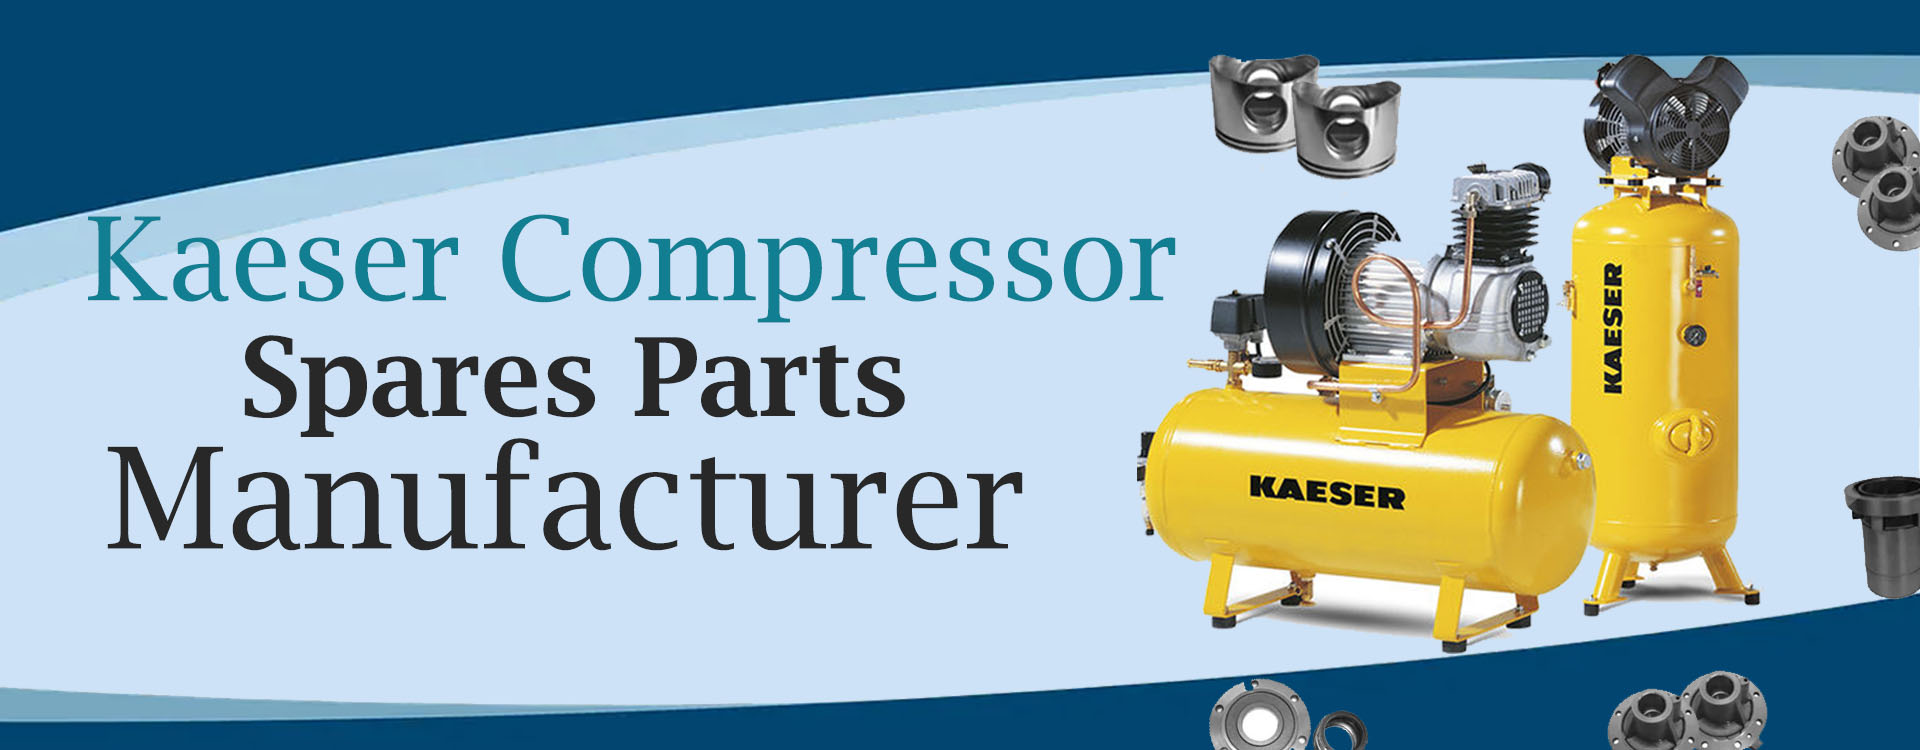 Kaeser Compressor Spare Parts In india